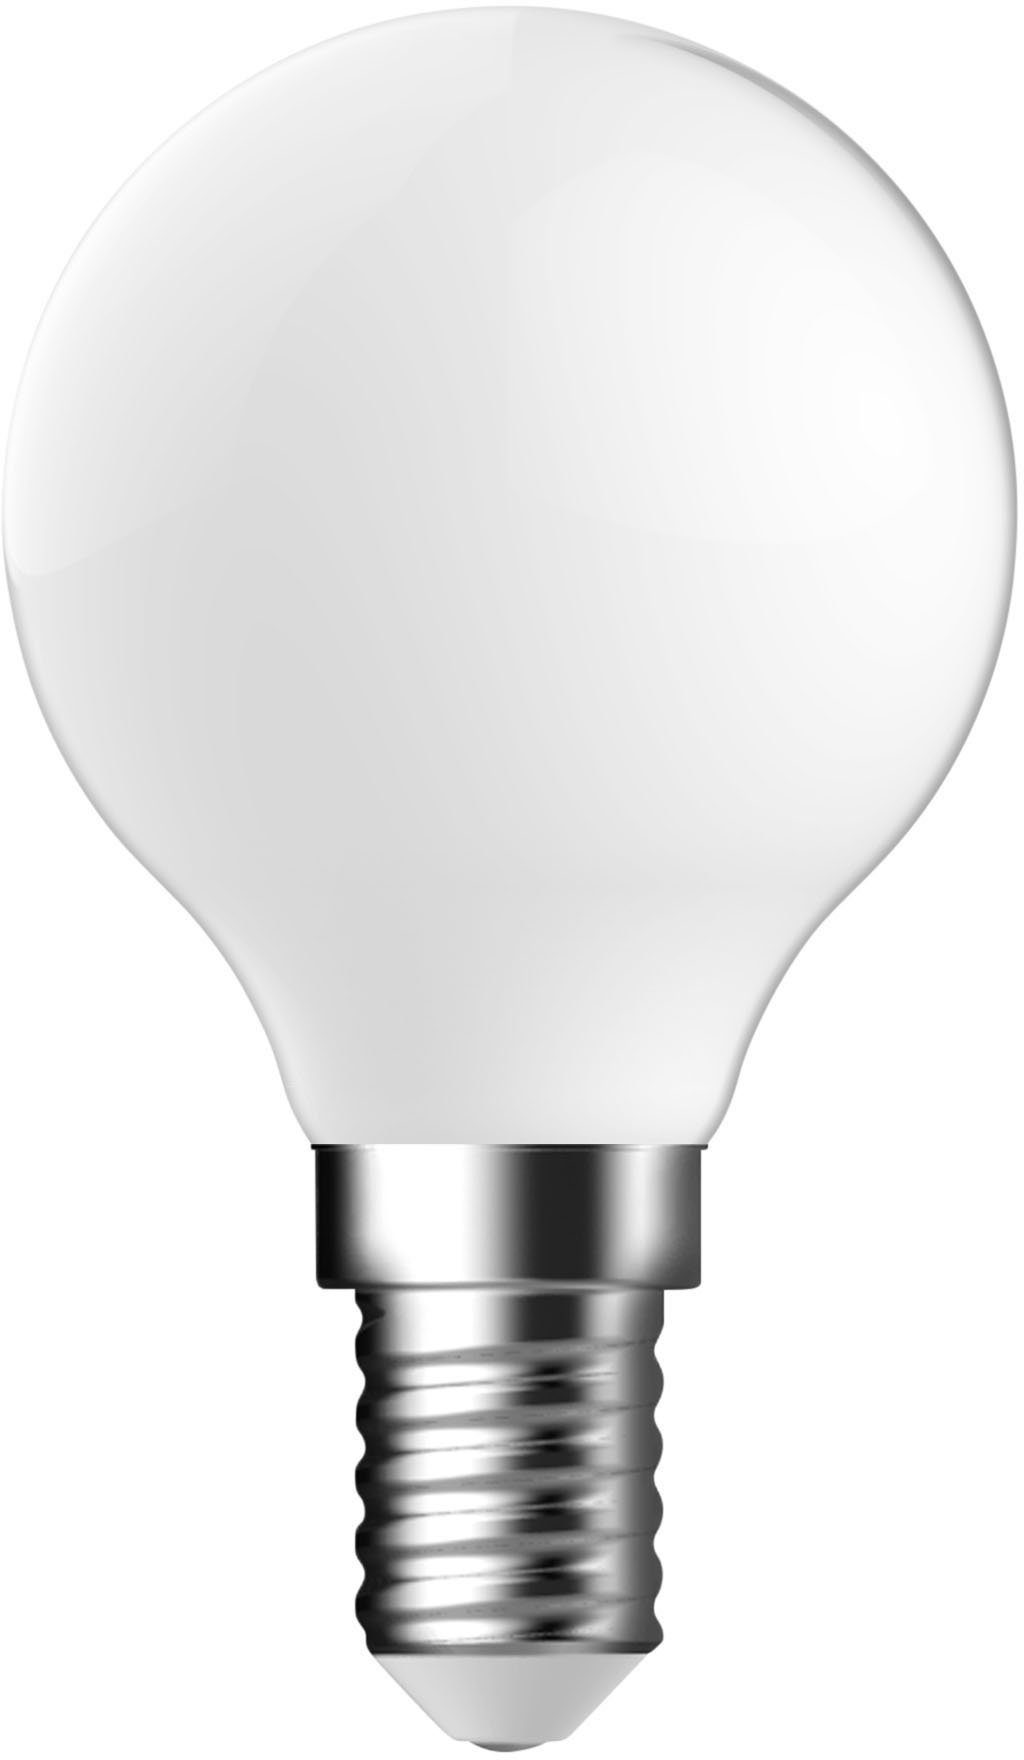 Nordlux LED-Leuchtmittel Paere, 6 St., Set mit 6 Stück, je 2,5 Watt